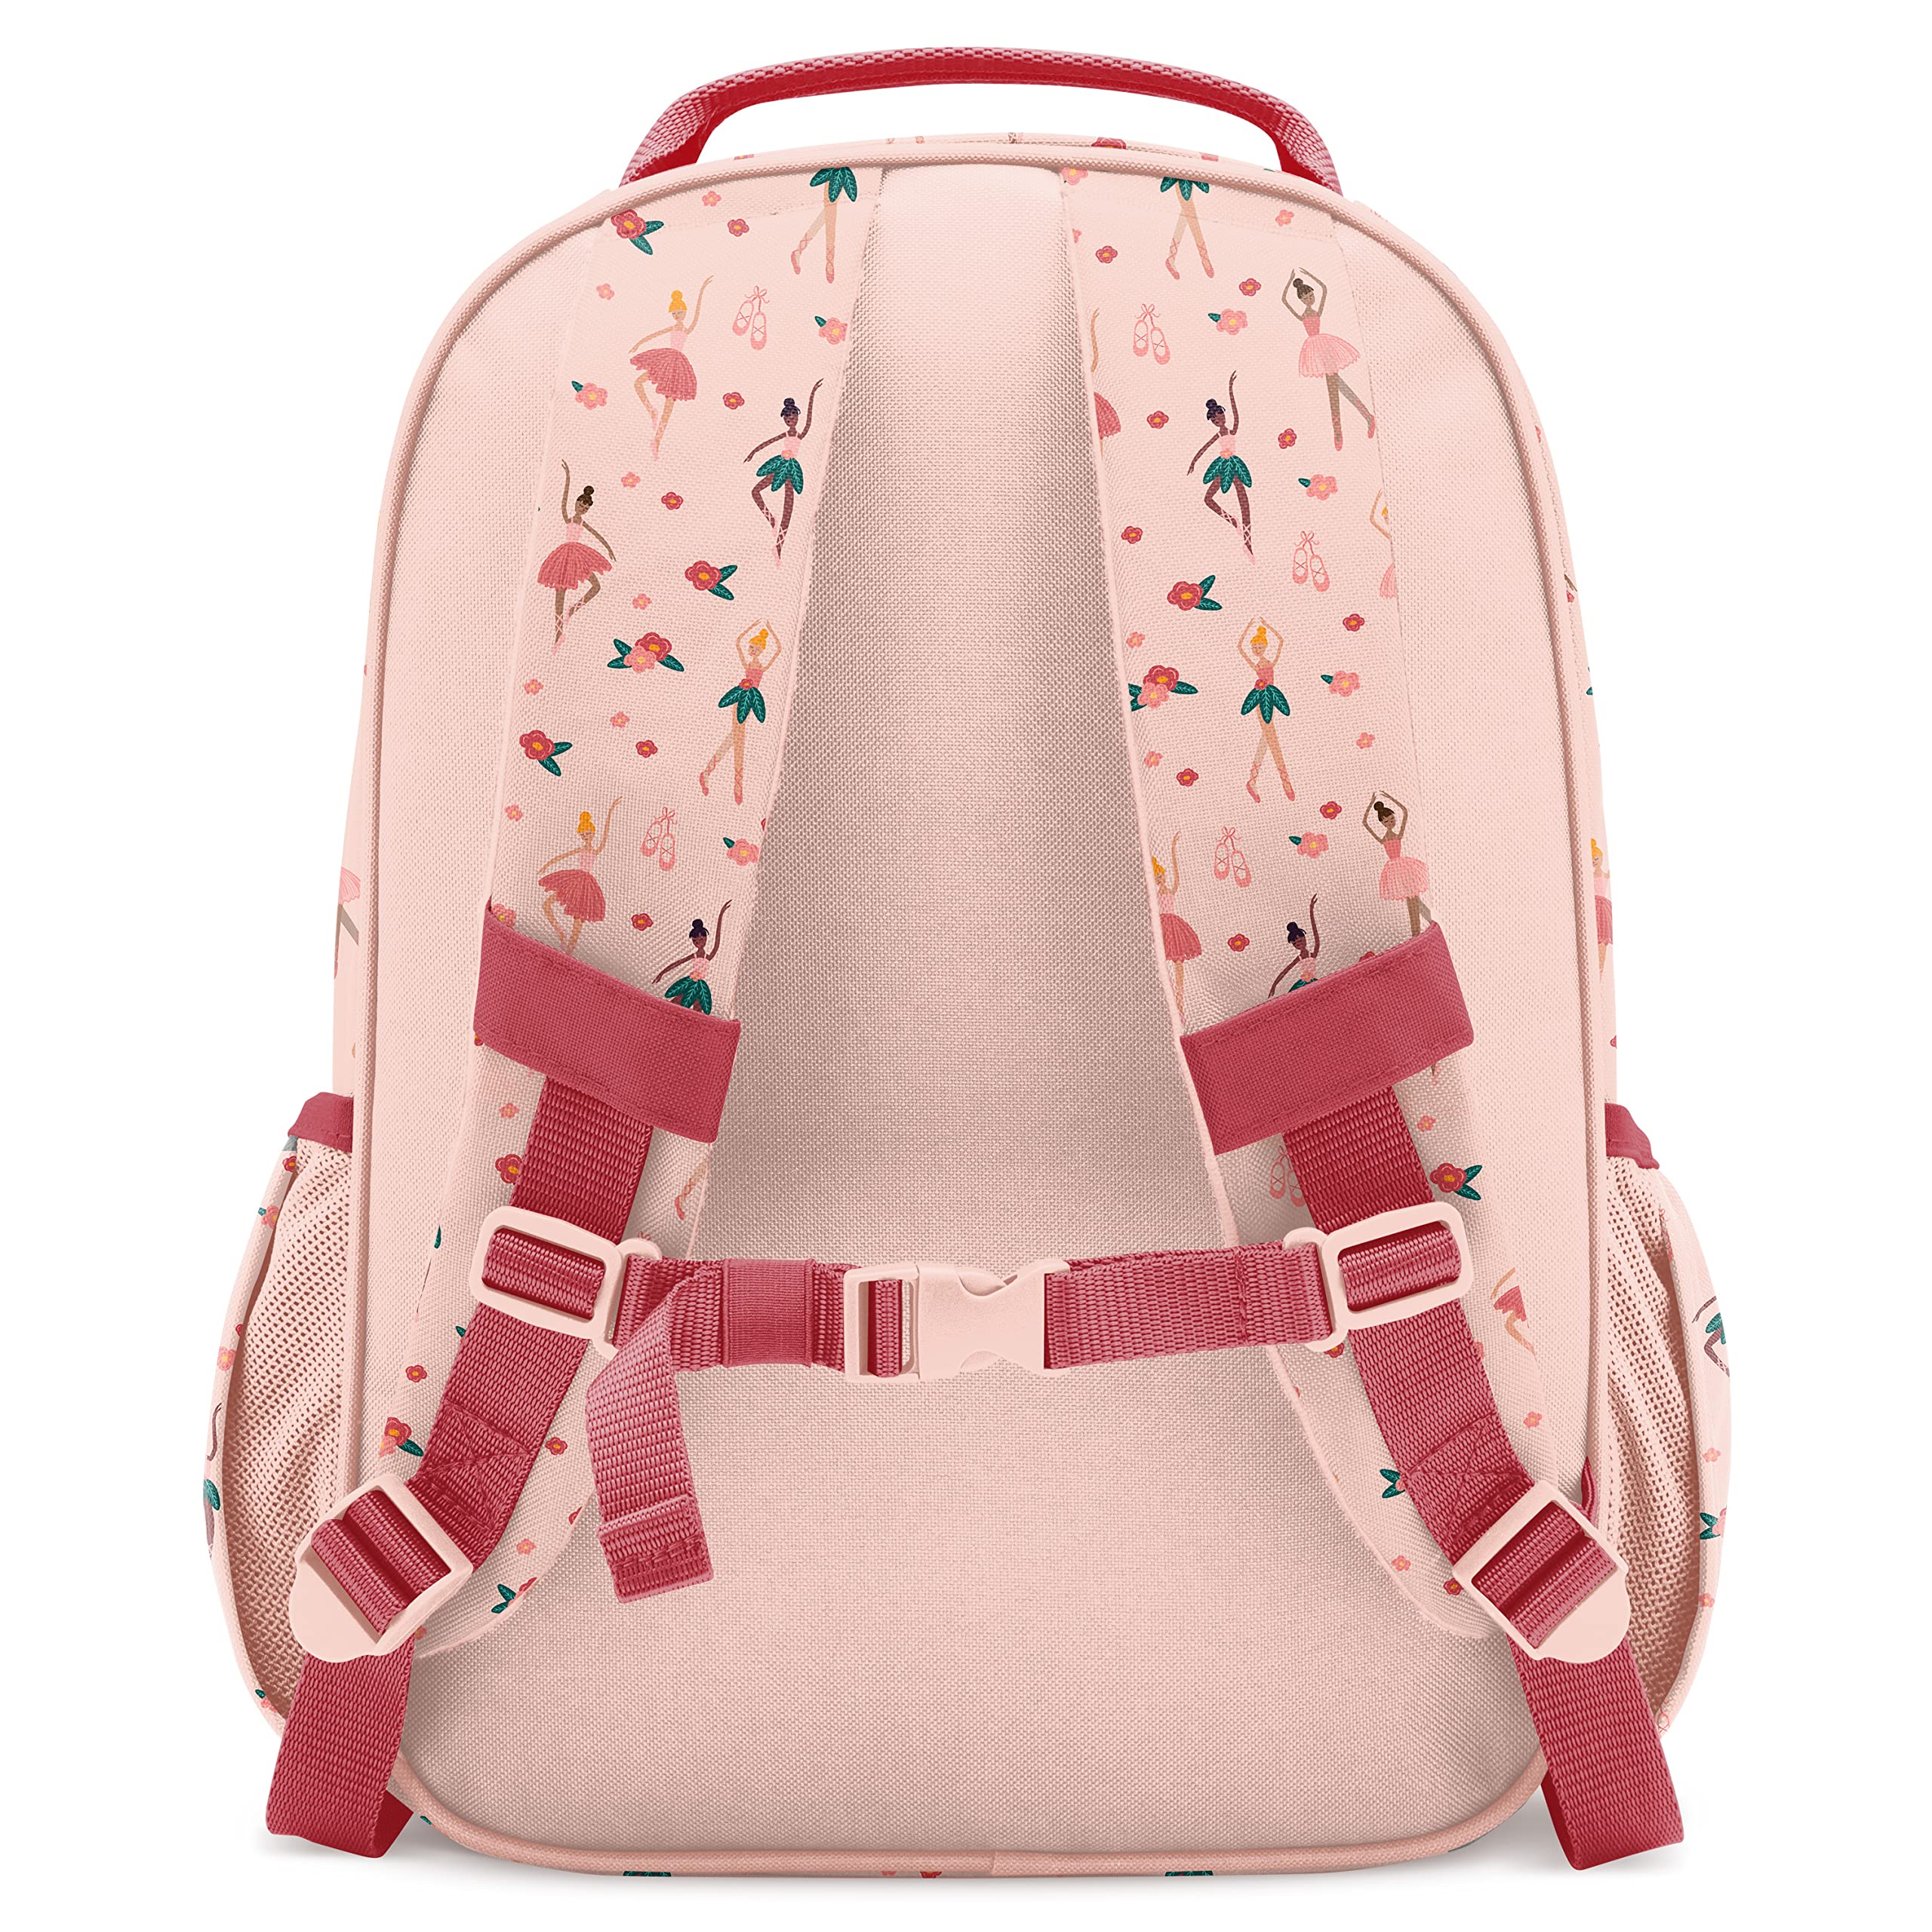 Simple Modern Kids Backpack for School Girls | Elementary Backpack for Teen | Fletcher Collection | Kids - Large (16